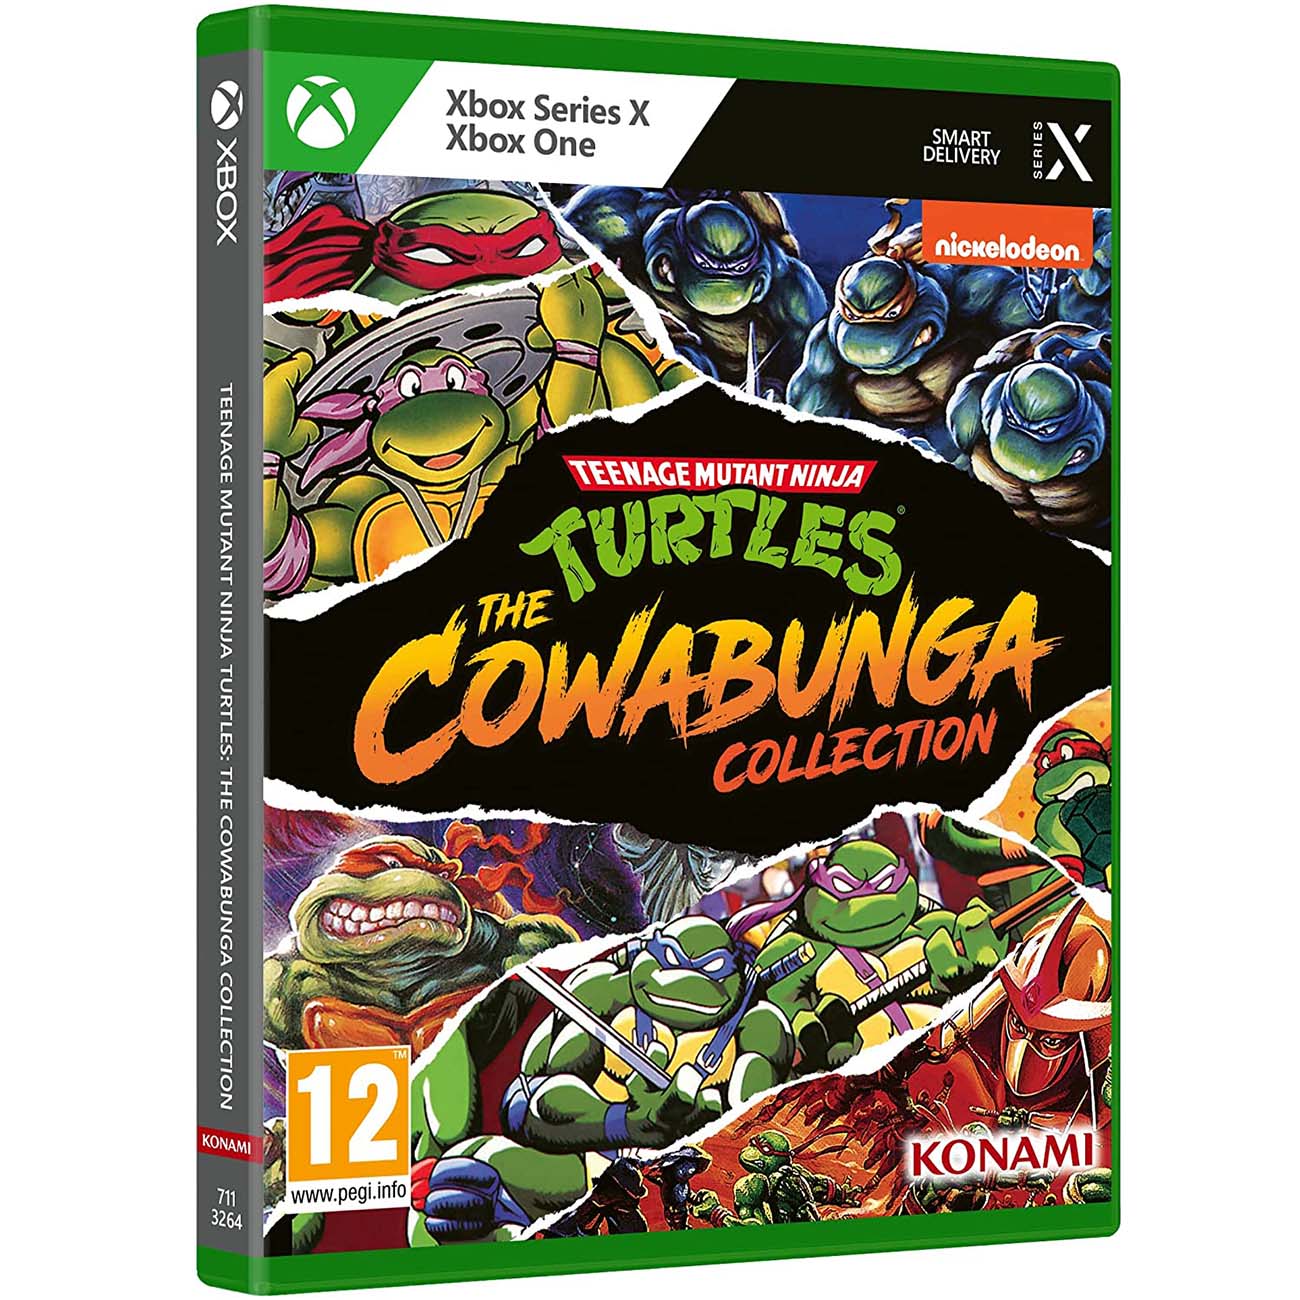 Turtles cowabunga collection. TMNT Cowabunga collection Xbox. Teenage Mutant Ninja Turtles: the Cowabunga collection. Teenage Mutant Ninja Turtles ps4. Konami Xbox 360.